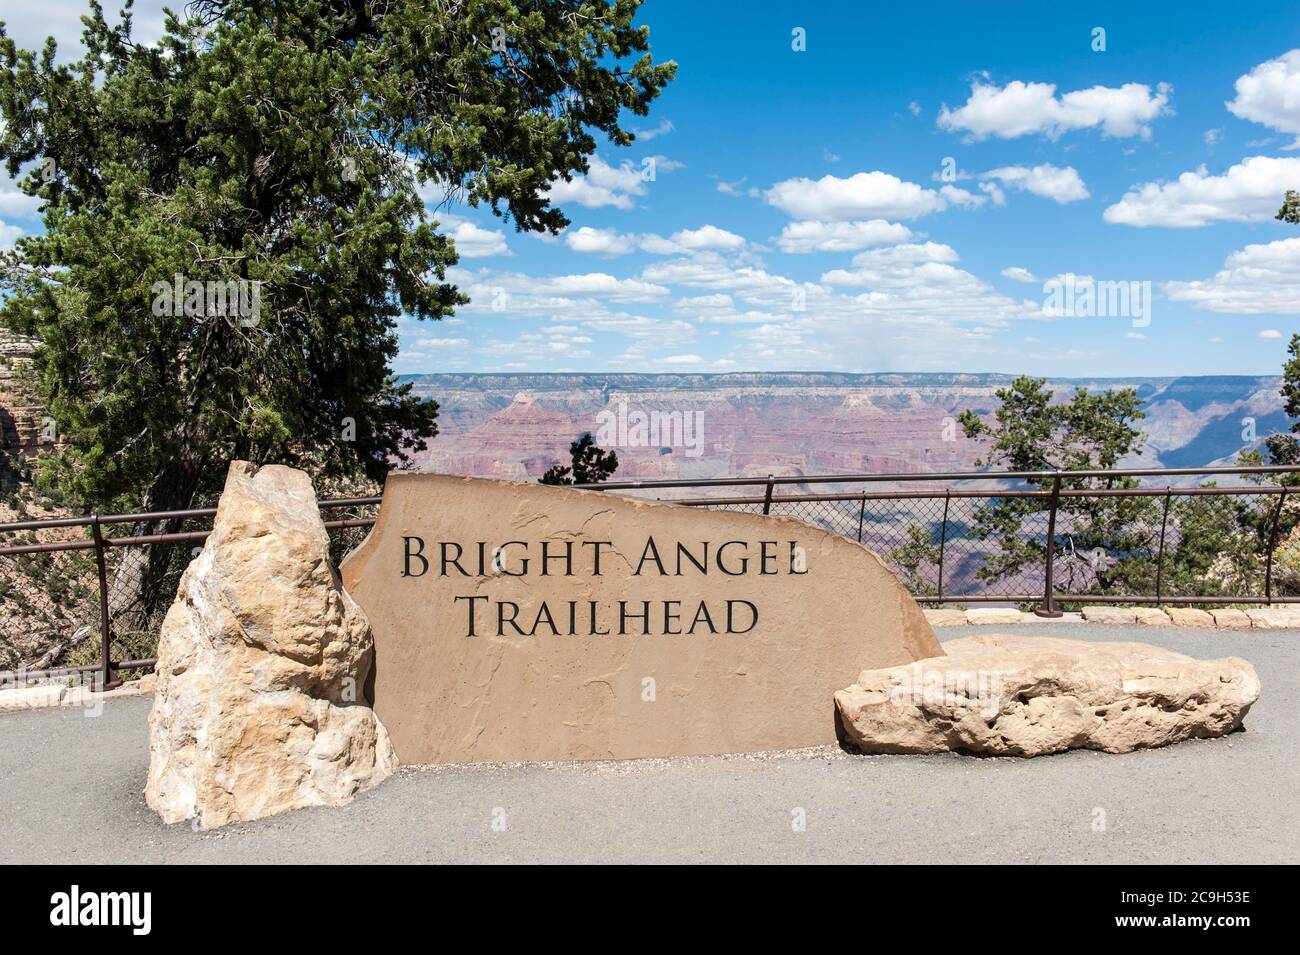 Starting point Bright Angel Trail, sign Bright Angel Trailhead, Colorado Plateau, Grand Canyon Village, Grand Canyon National Park, Arizona, USA Stock Photo